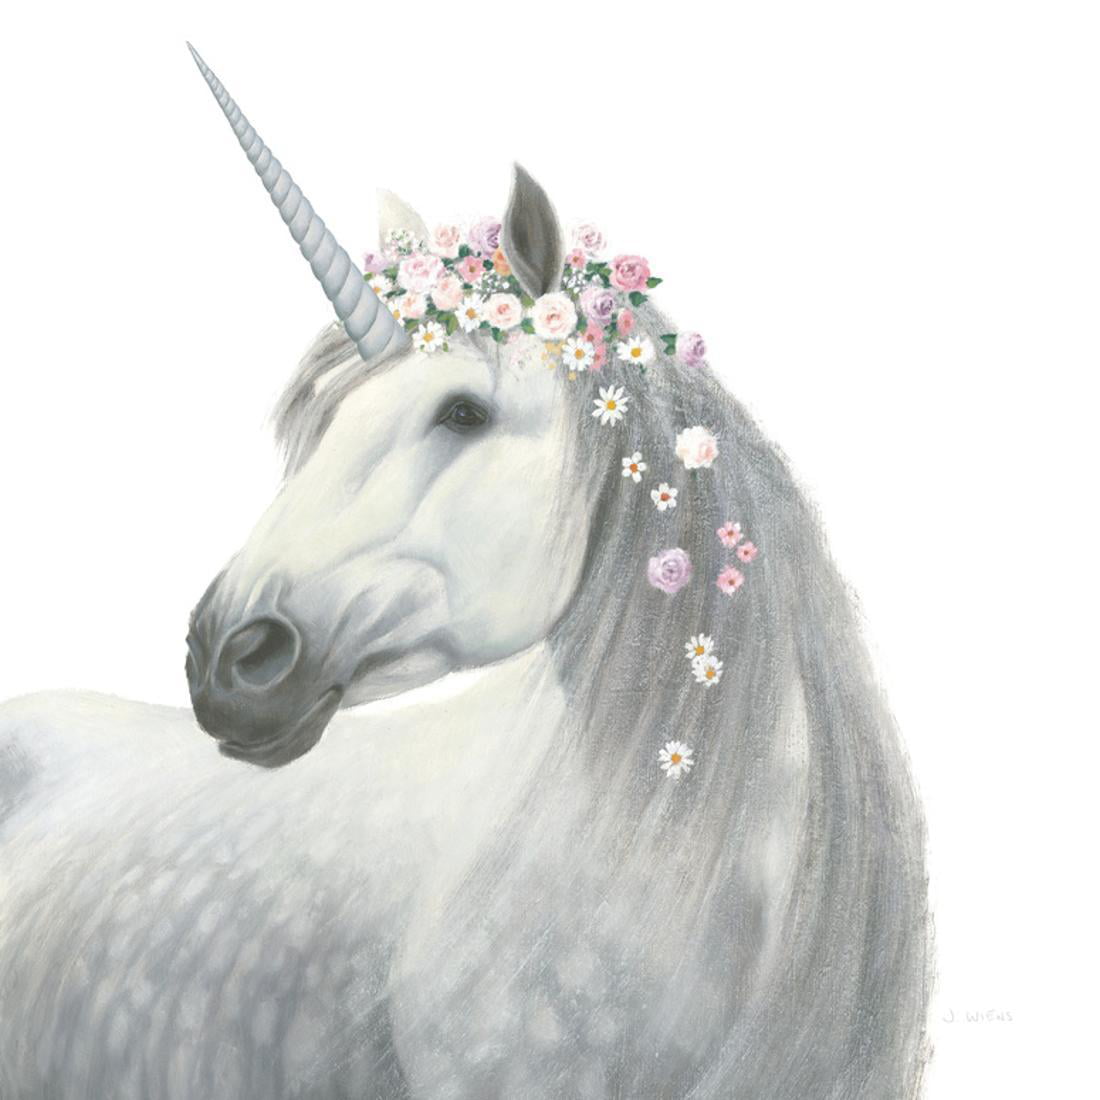 httpsipSpirit Unicorn II Square Kids Girl Room Fantasy Magical Artwork Print Wall Art By James Wiens146958377